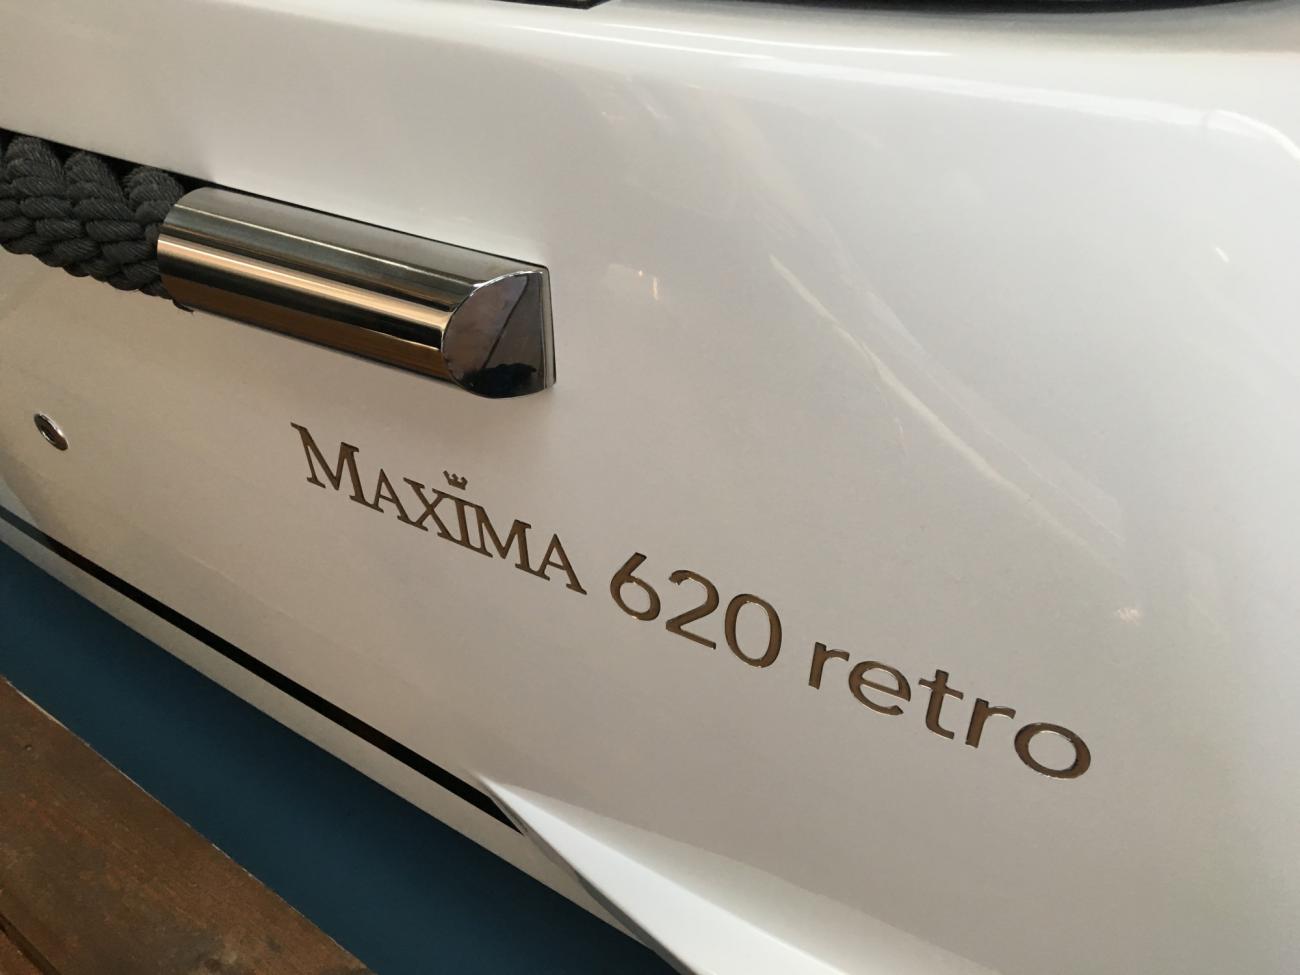 Maxima 620 Retro